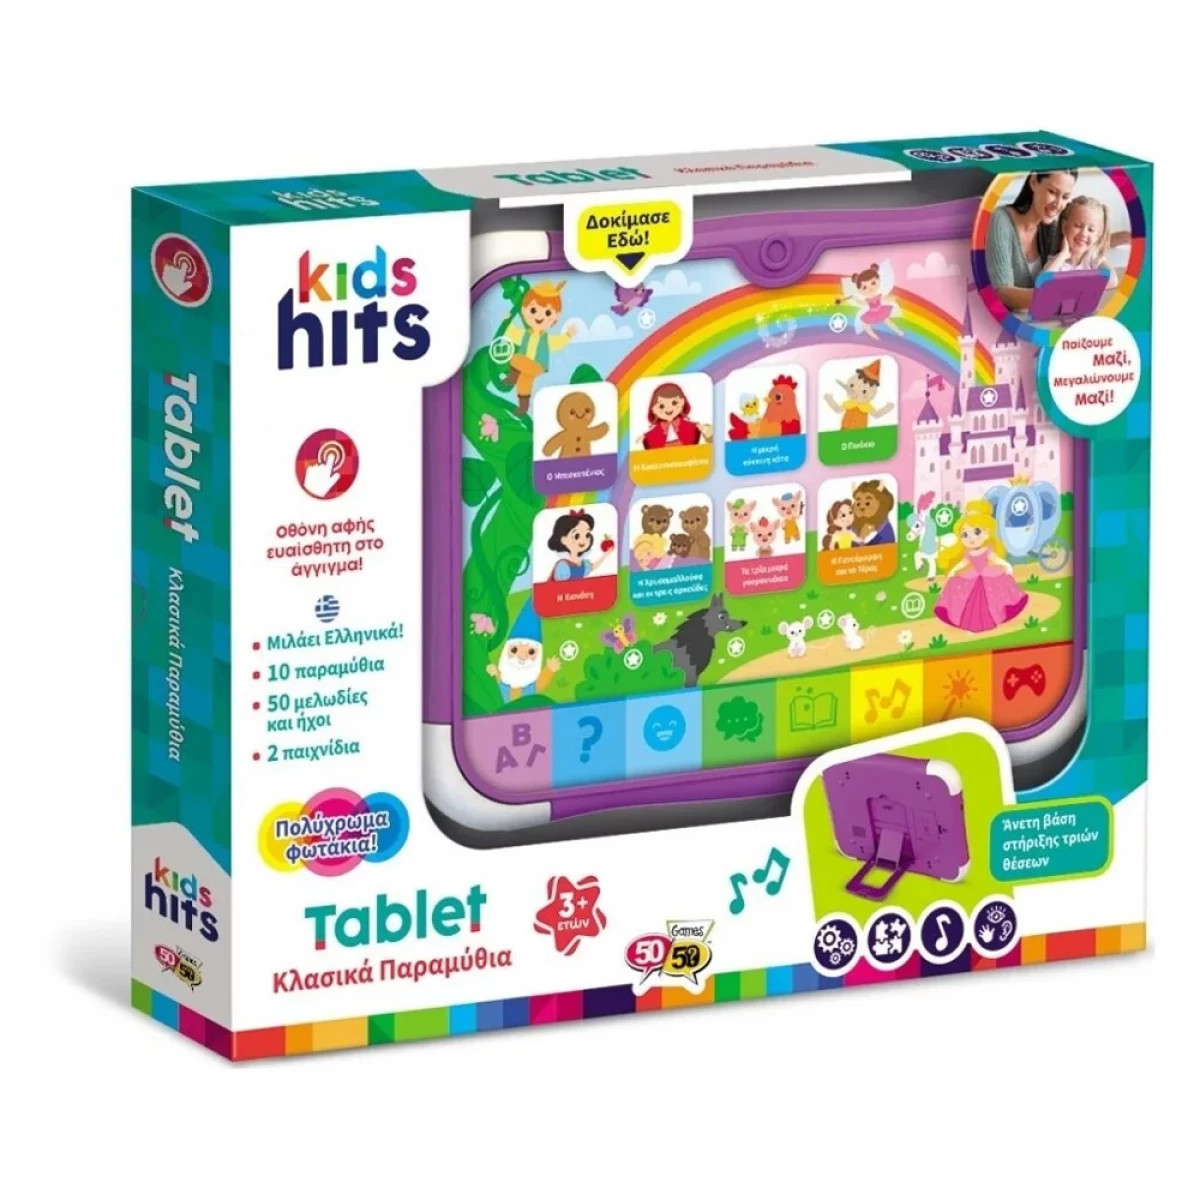 50/50 Games Kids Hits Εκπαιδευτικό Tablet Κλασικά Παραμύθια (3+ Ετών)